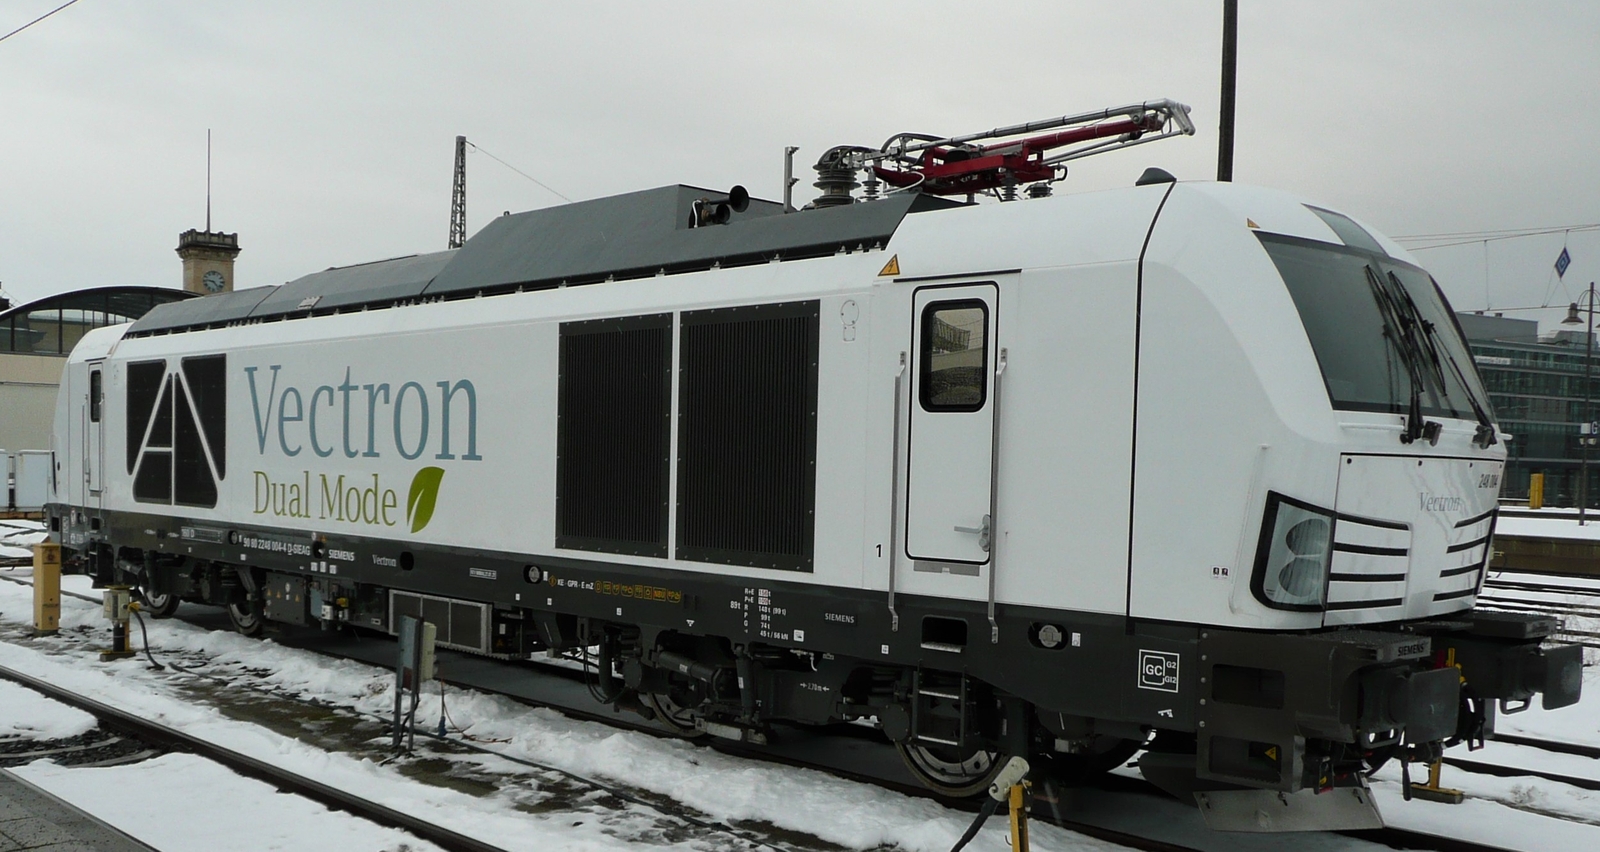 Vectron DM 248 004 as a Siemens demonstrator in February 2021 in Dresden